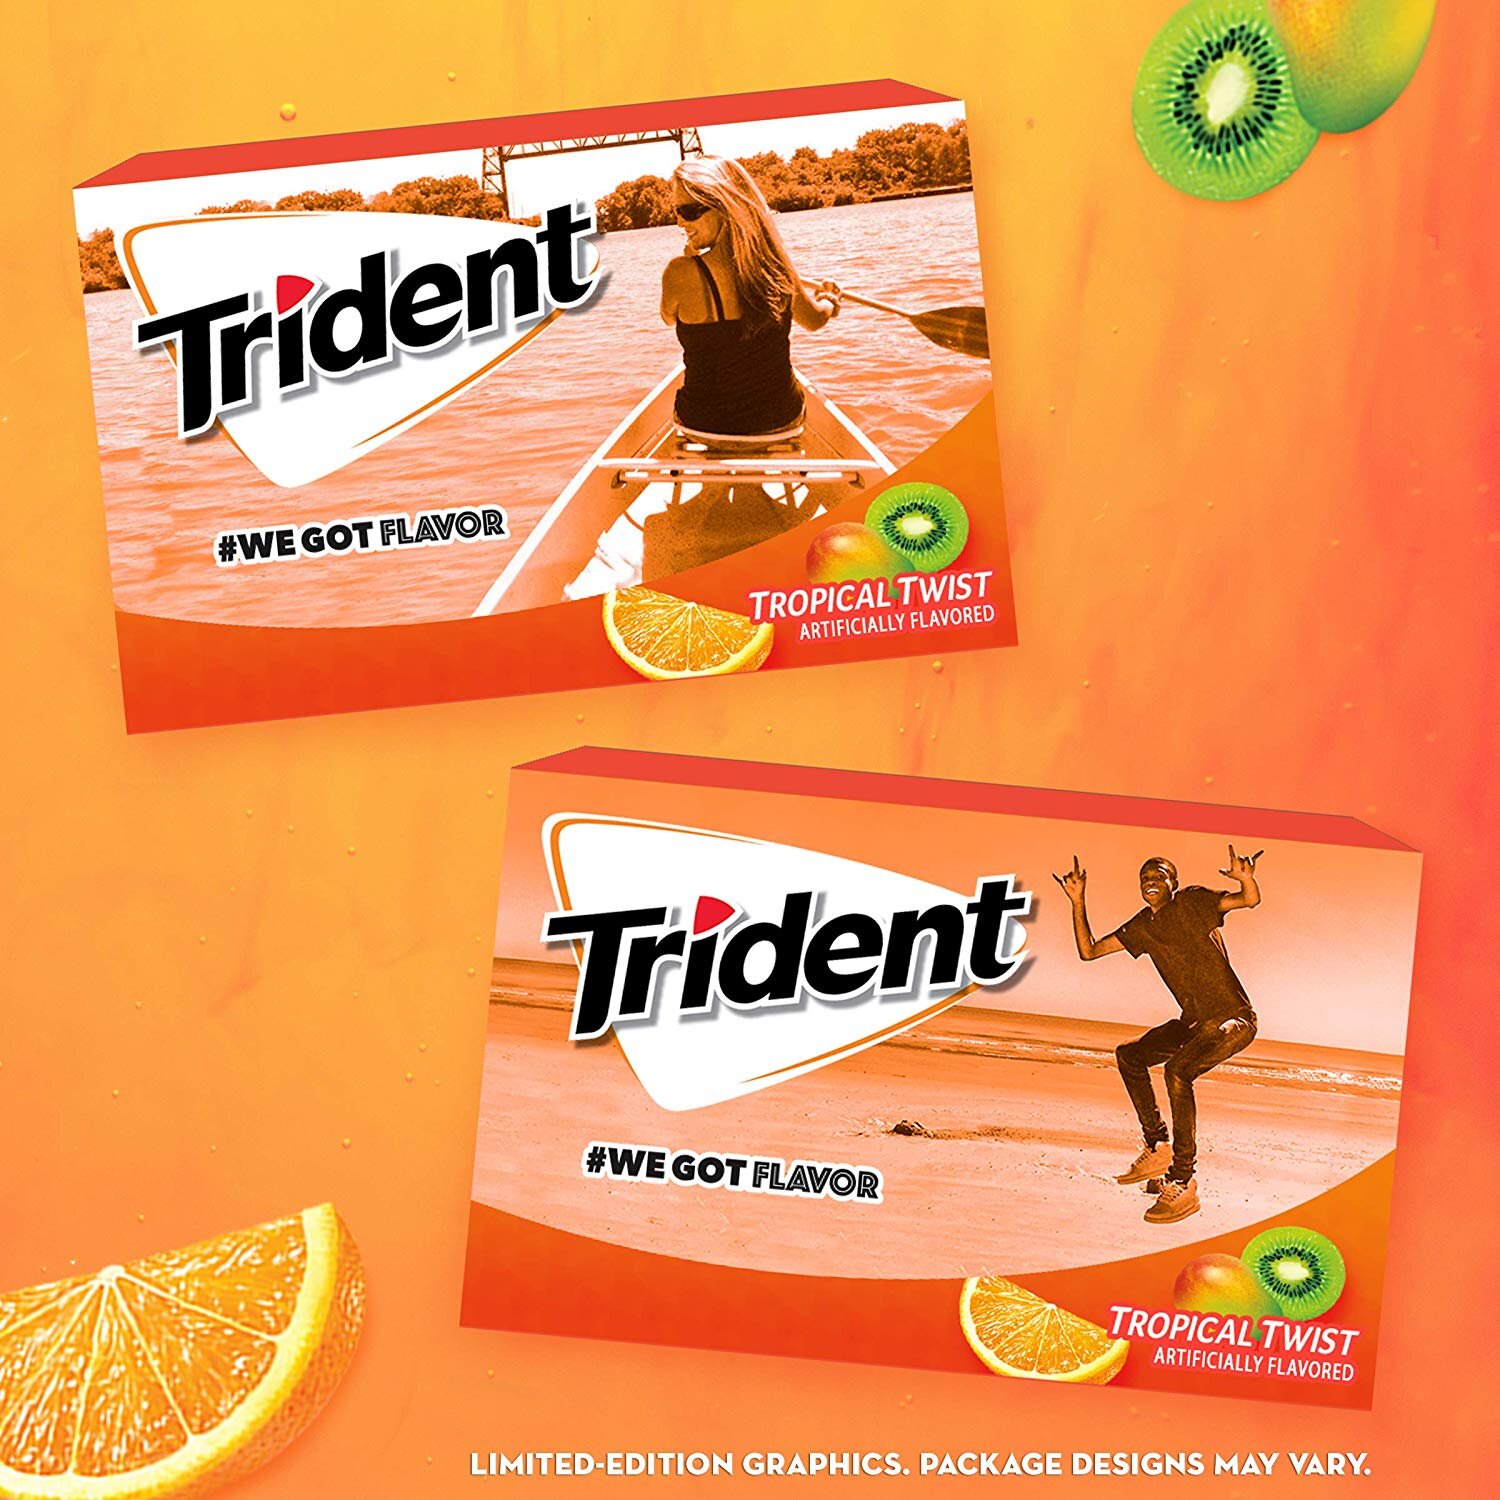 Trident-Tropical-Twist-Flavor-Sugar-Free-Gum12-Packs-168-Pieces-Total-Packaging-May-Vary-B072LR912H-4.jpg